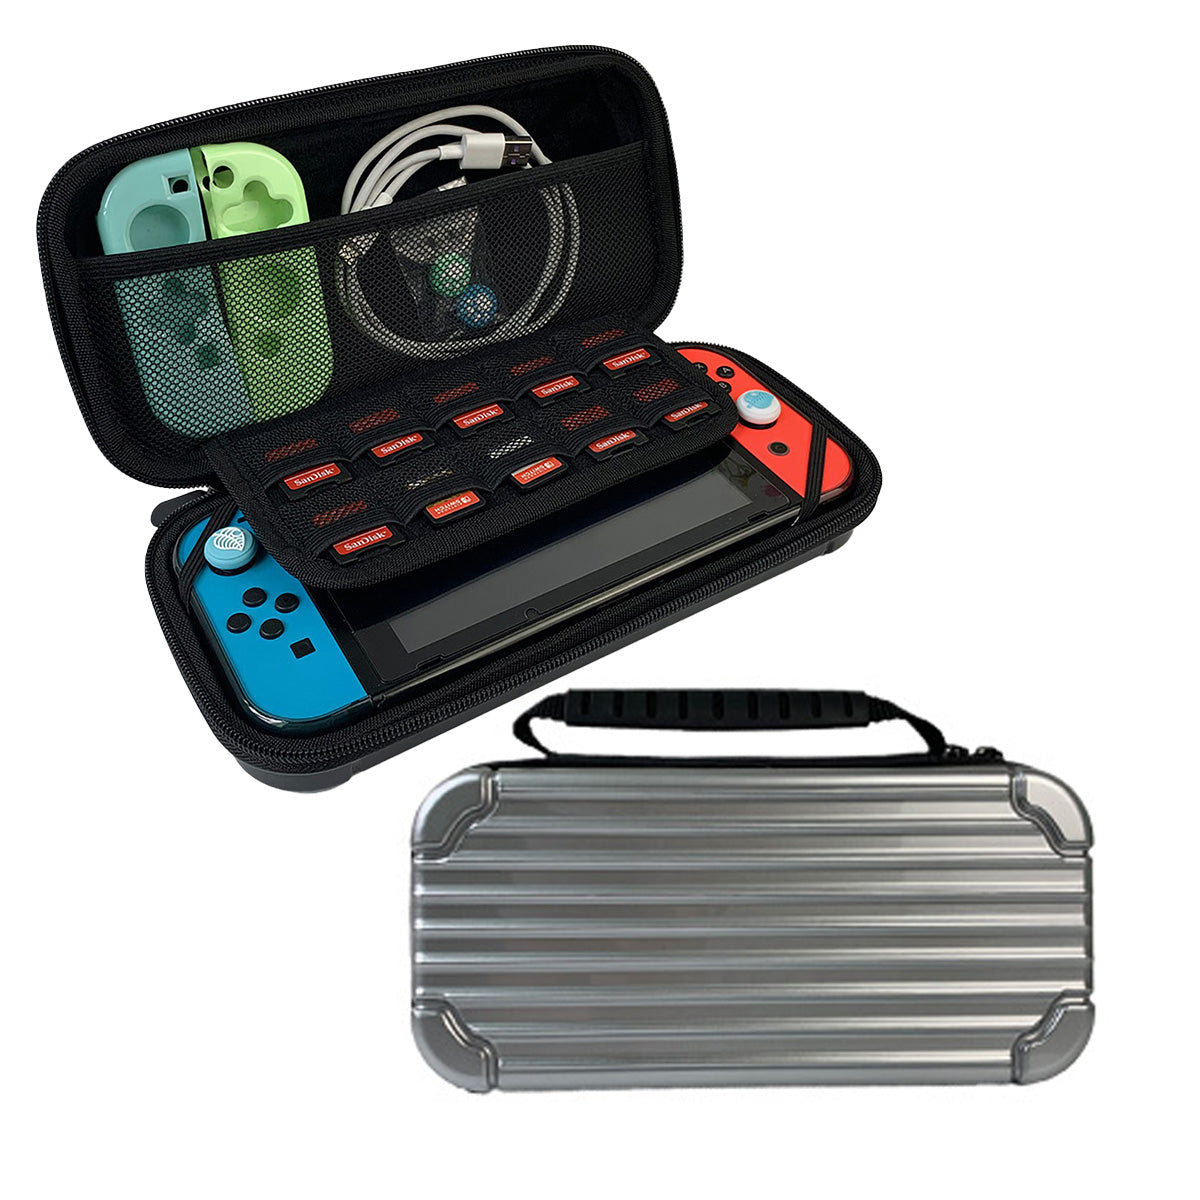 Switch ケース 耐衝撃 Nintendo Switch Lite 収納ケース ニンテンドースイッチ カバー ポーチ ポータブル カード収納 ニンテンドースイッチライト ケース OLED ゲーム周辺機器